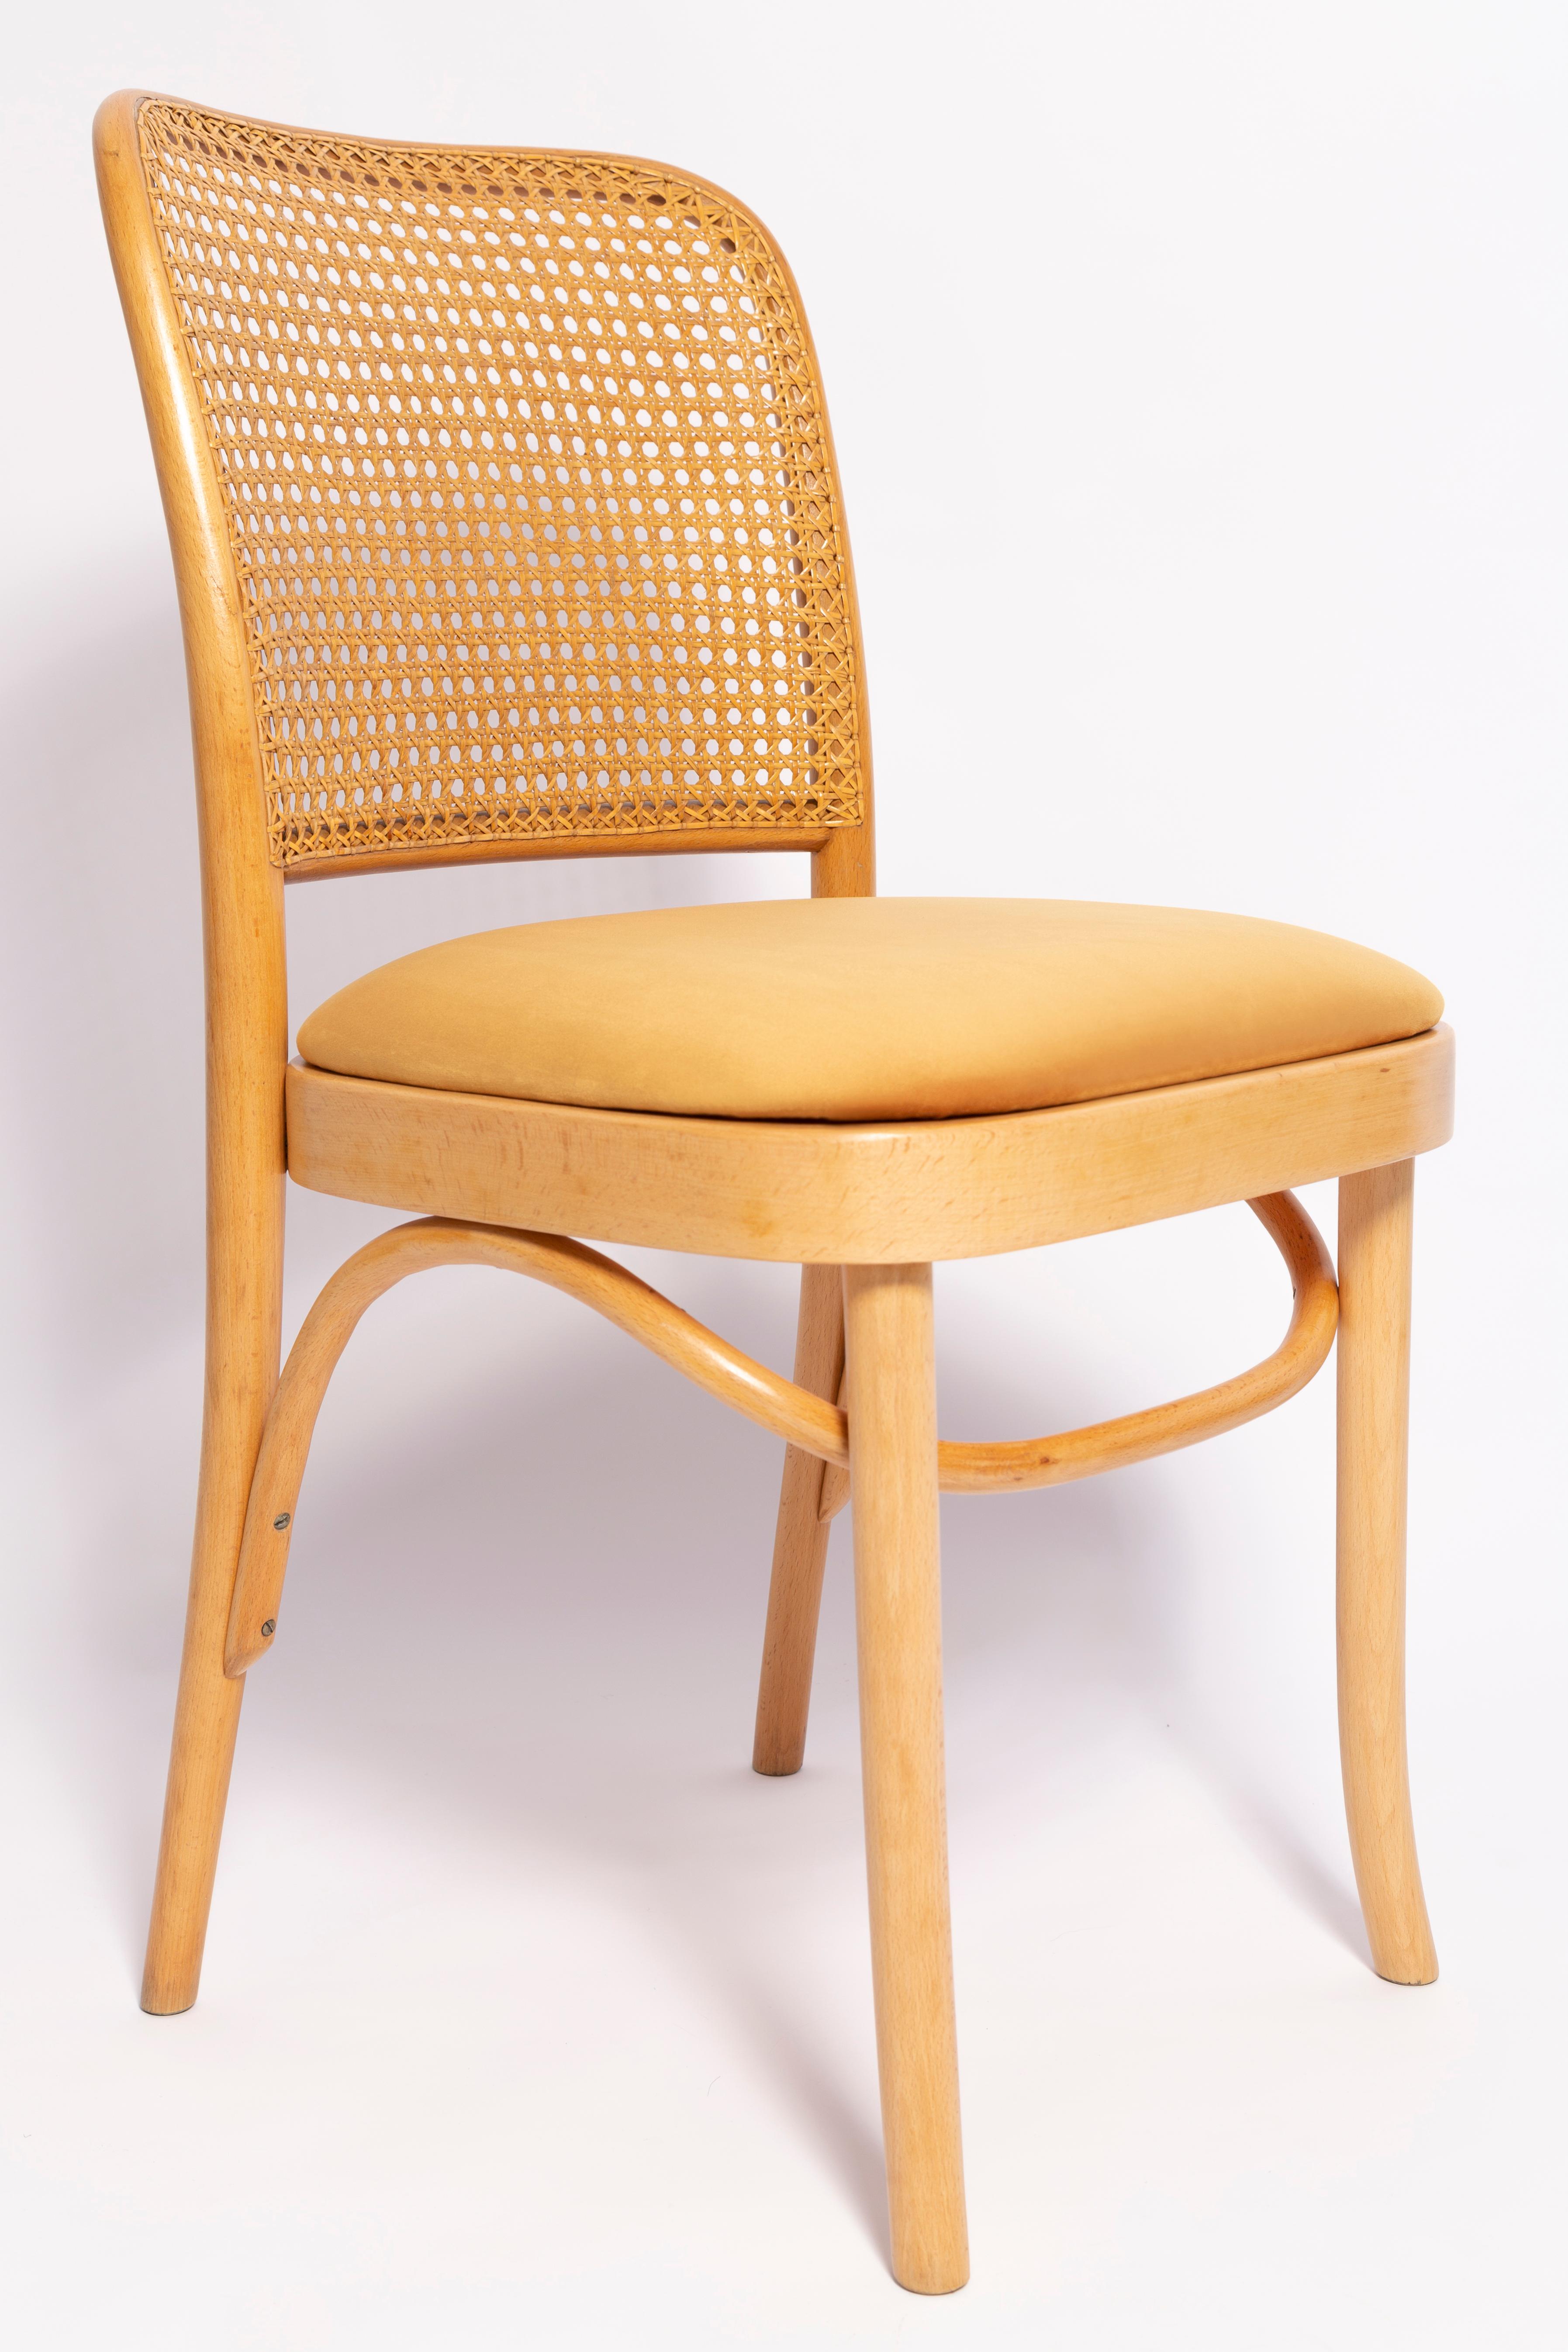 Polish Set of Six Mid Century Yellow Velvet Thonet Wood Rattan Chairs, Europe, 1960s For Sale